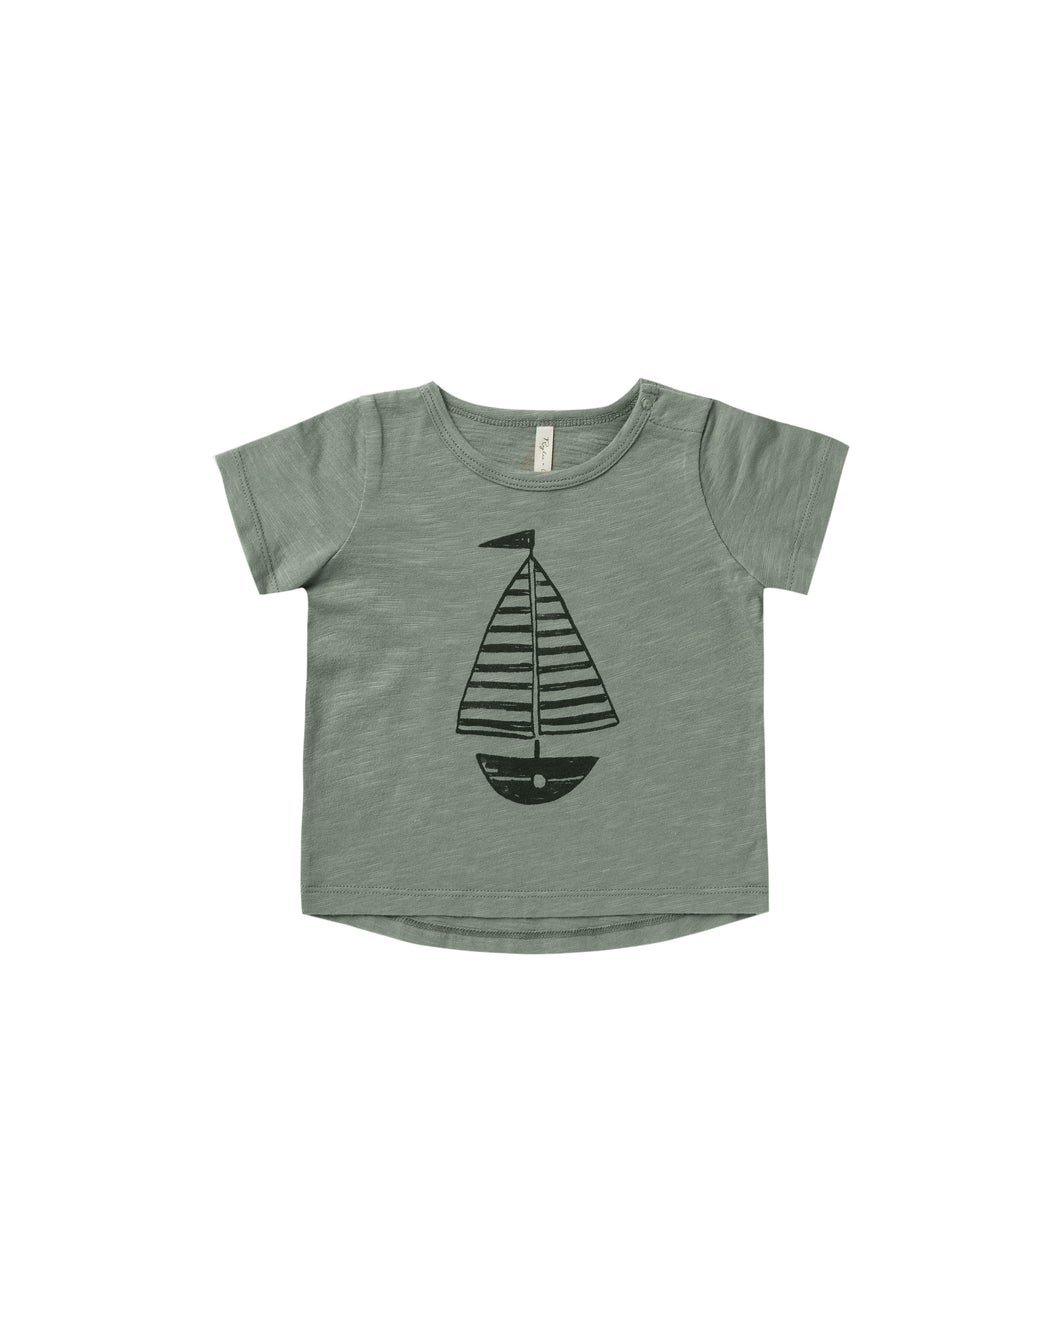 basic tee | sailboat